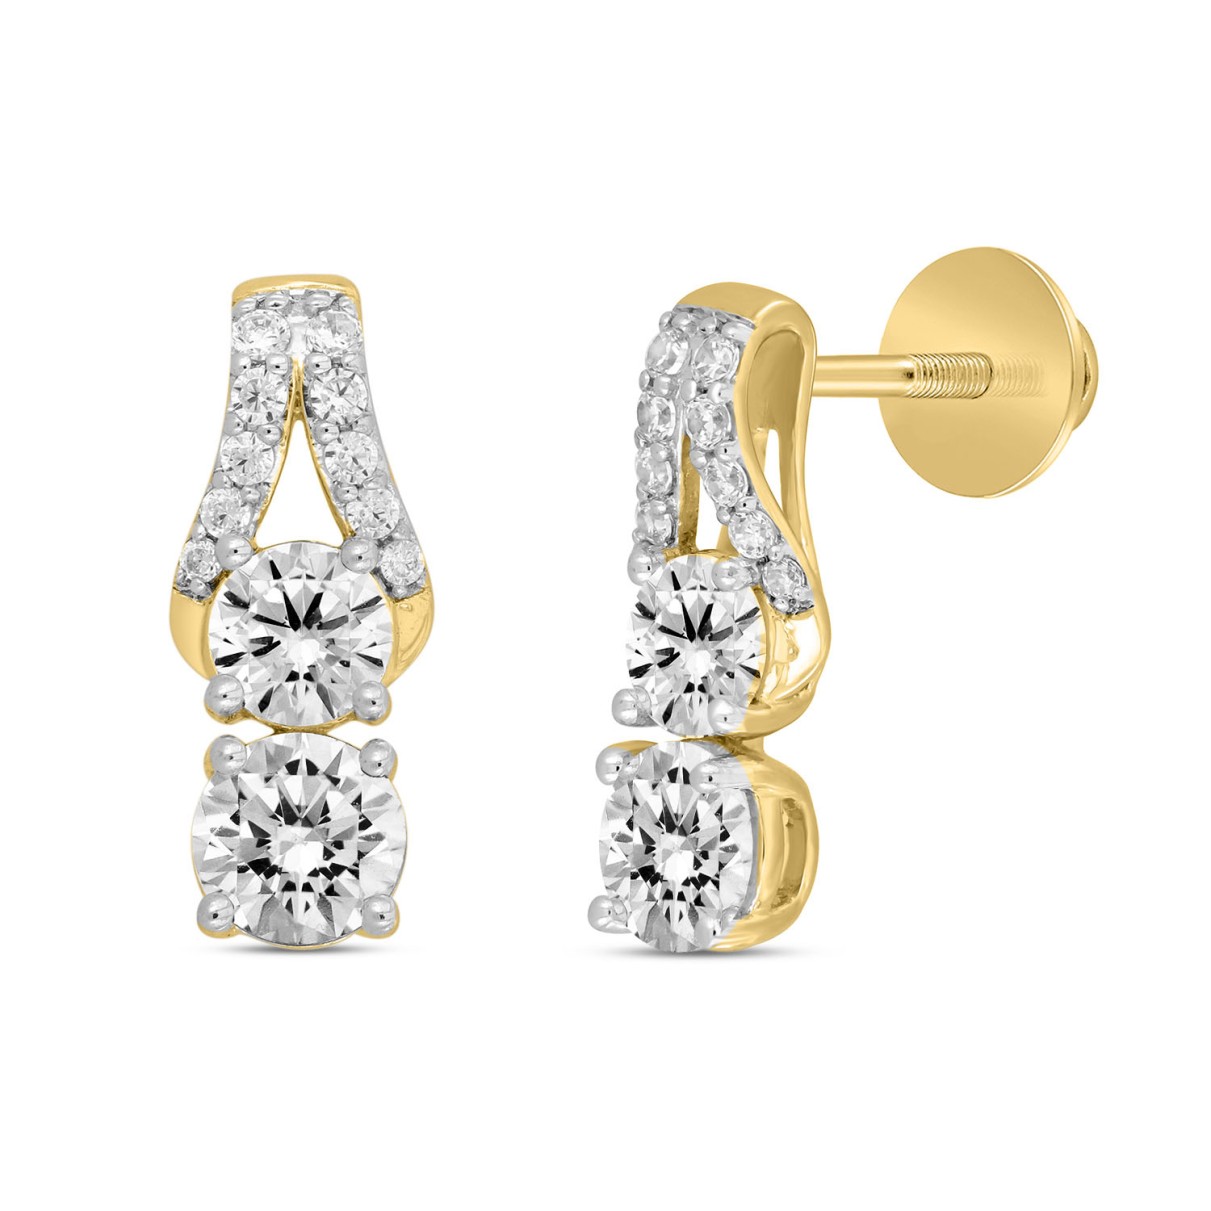 LADIES EARRINGS 2CT ROUND DIAMOND 14K YELLOW GOLD